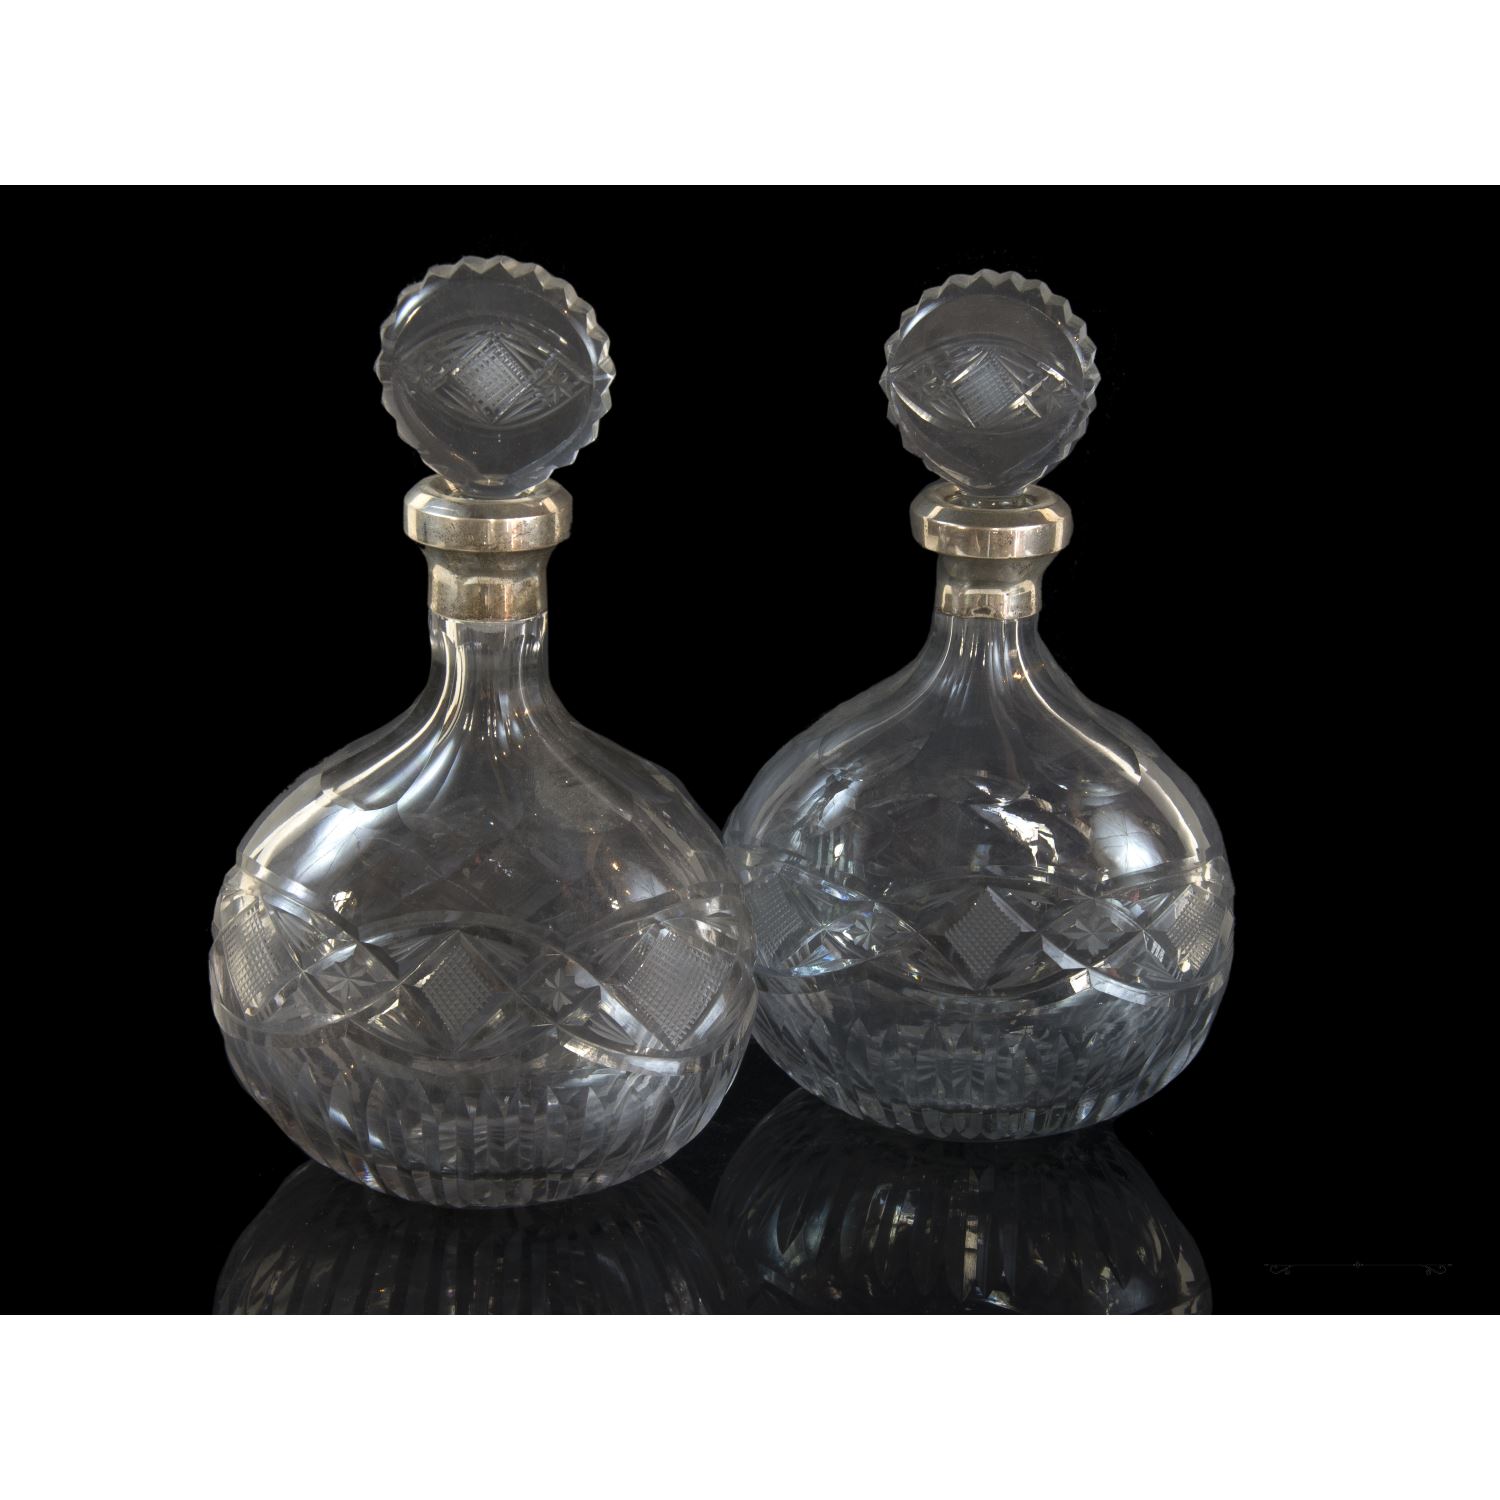 Pair of 19th century glass bottles